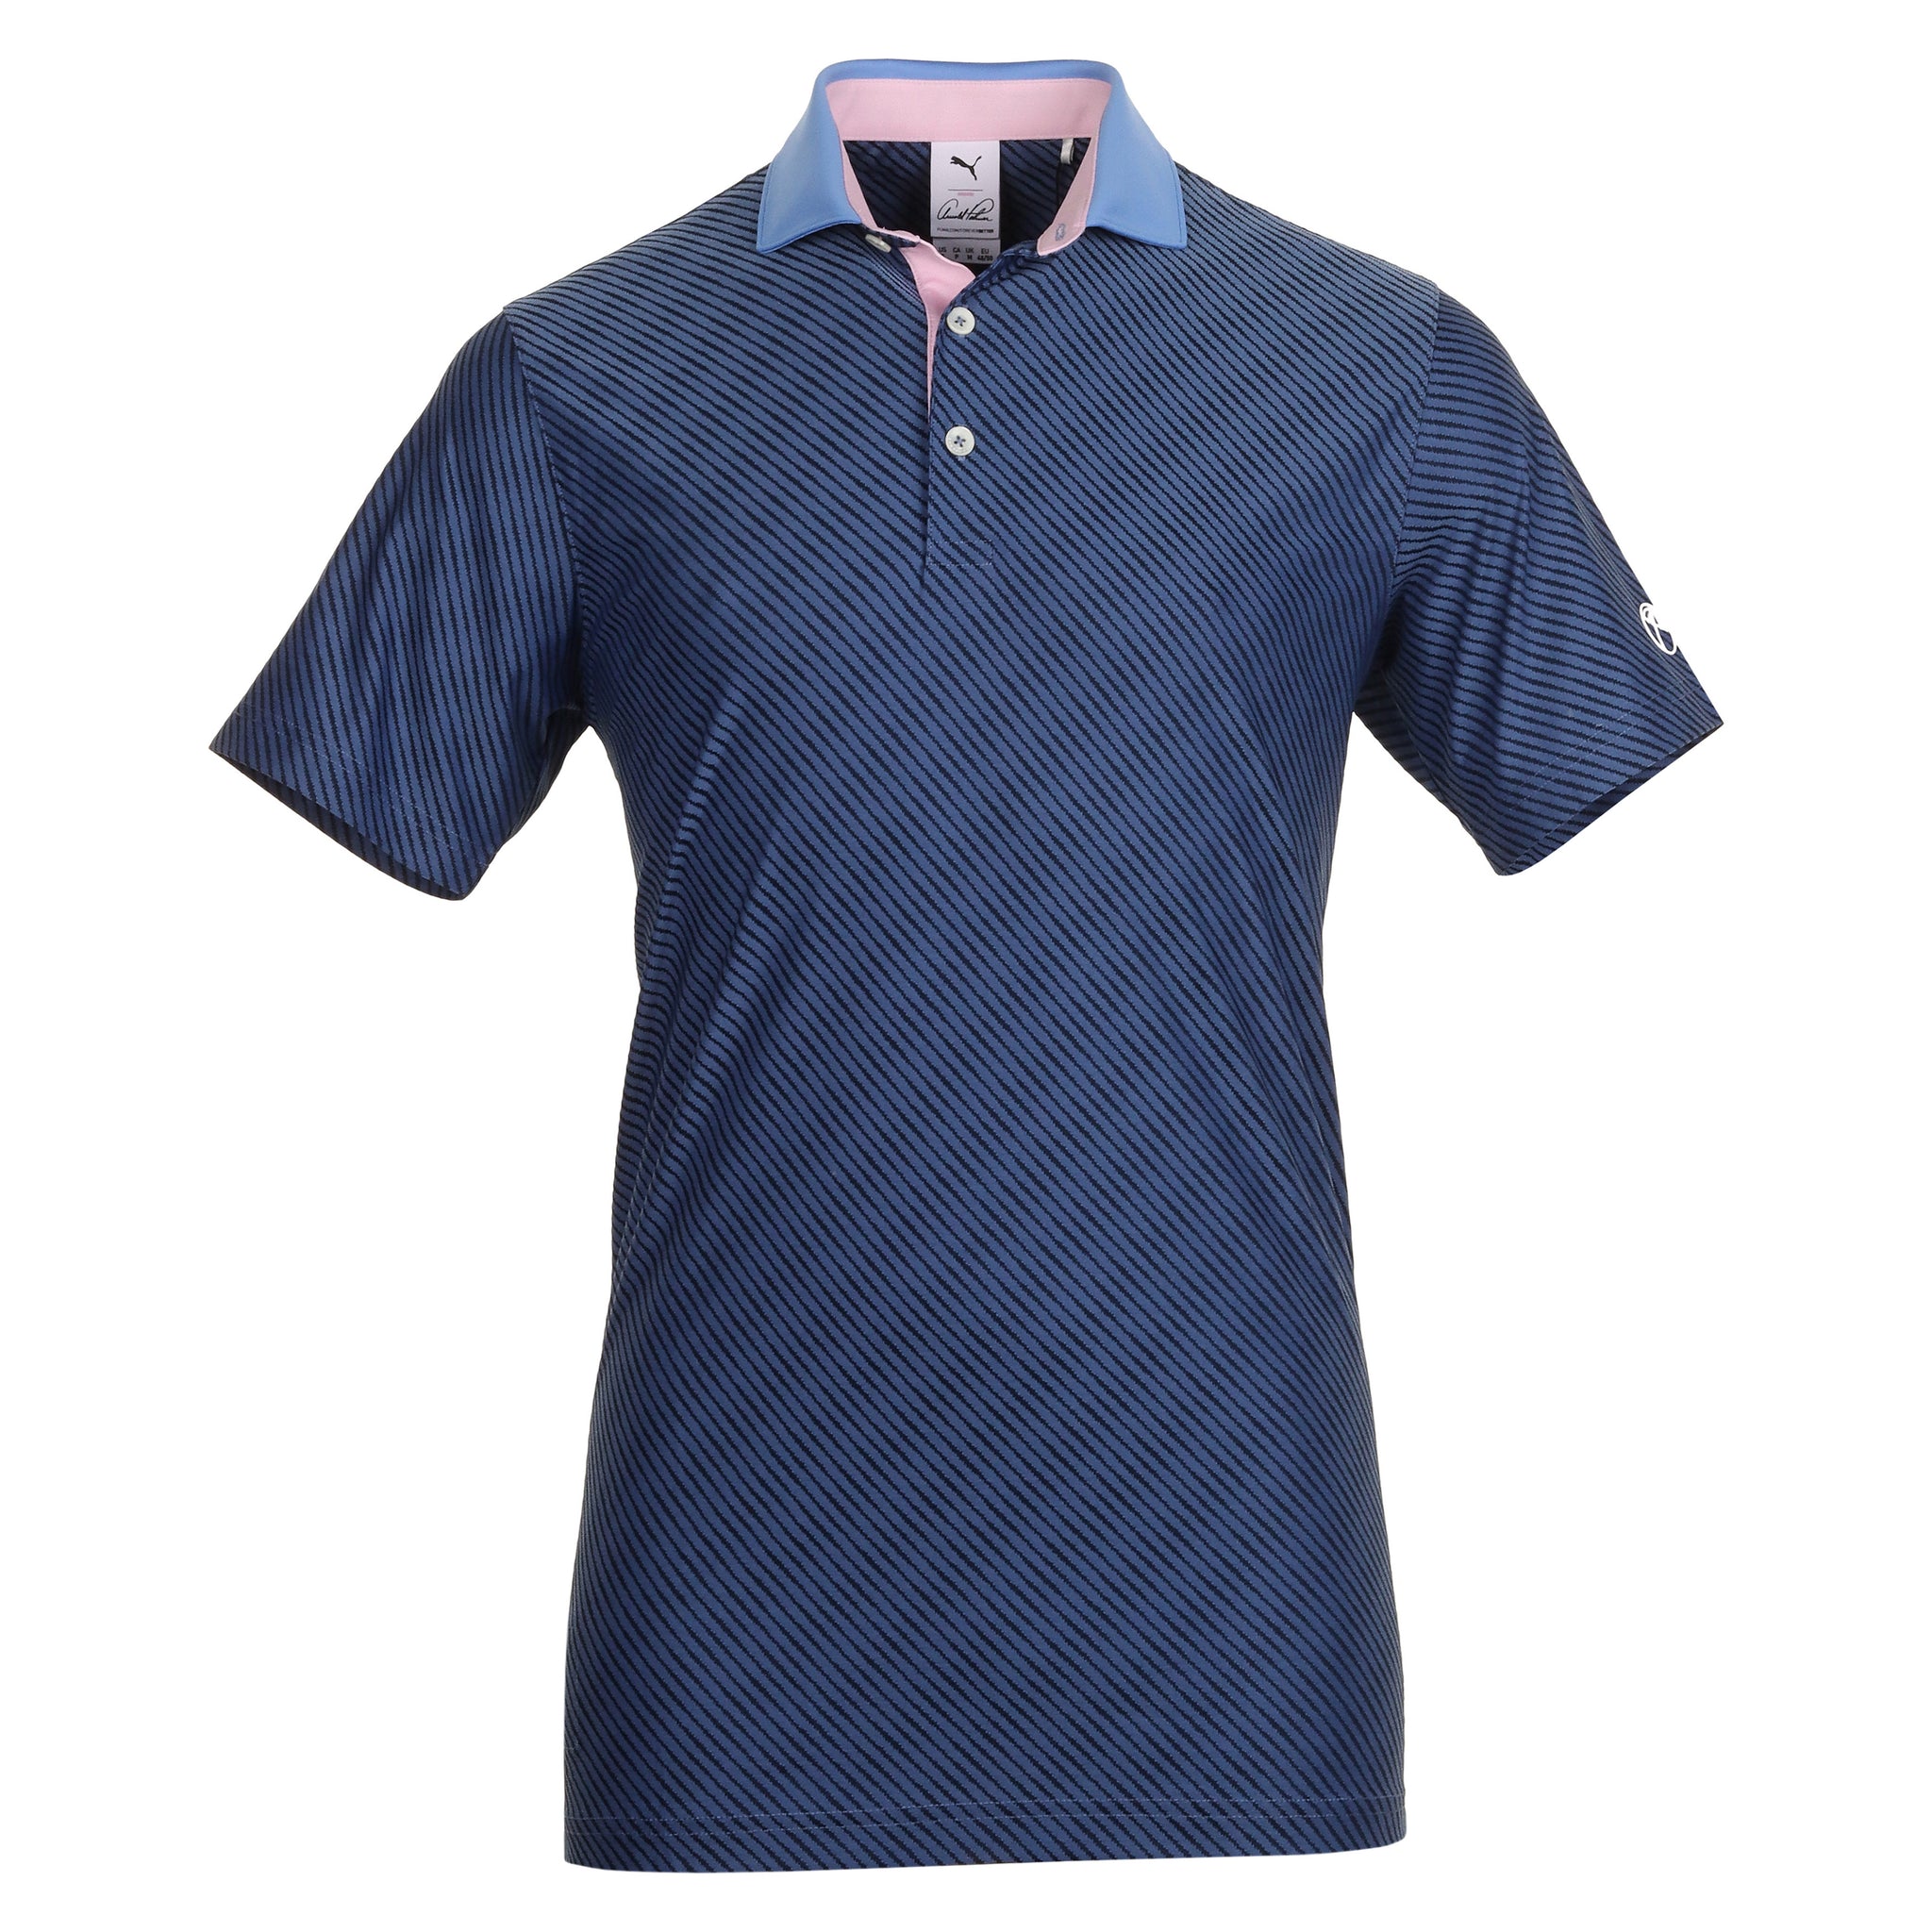 Puma Golf X Arnold Palmer Jacquard Stripe Shirt